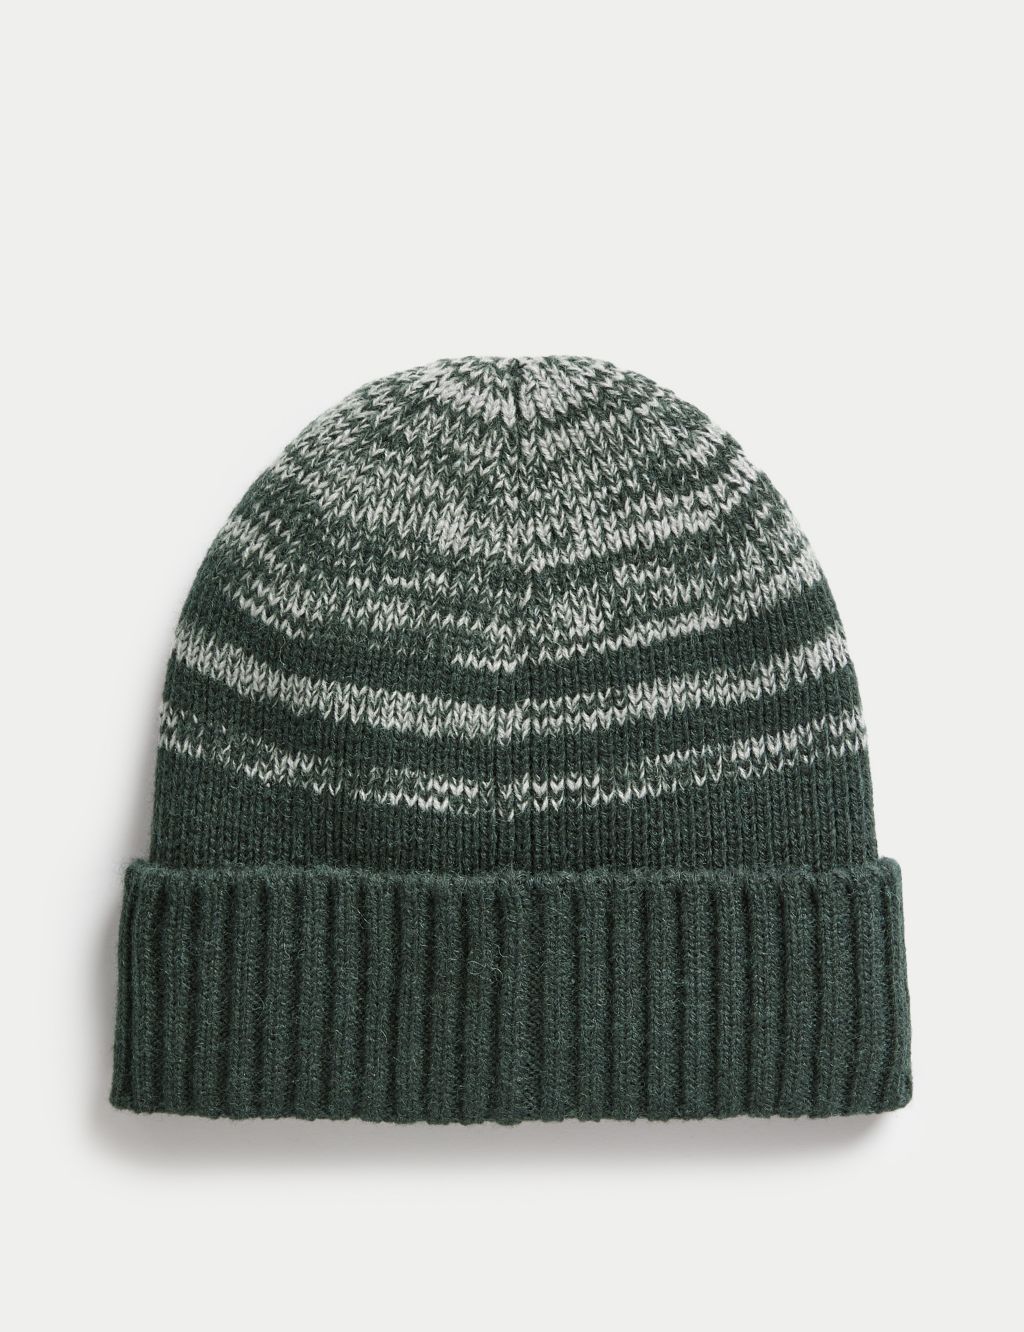 Wool Blend Striped Beanie Hat image 1